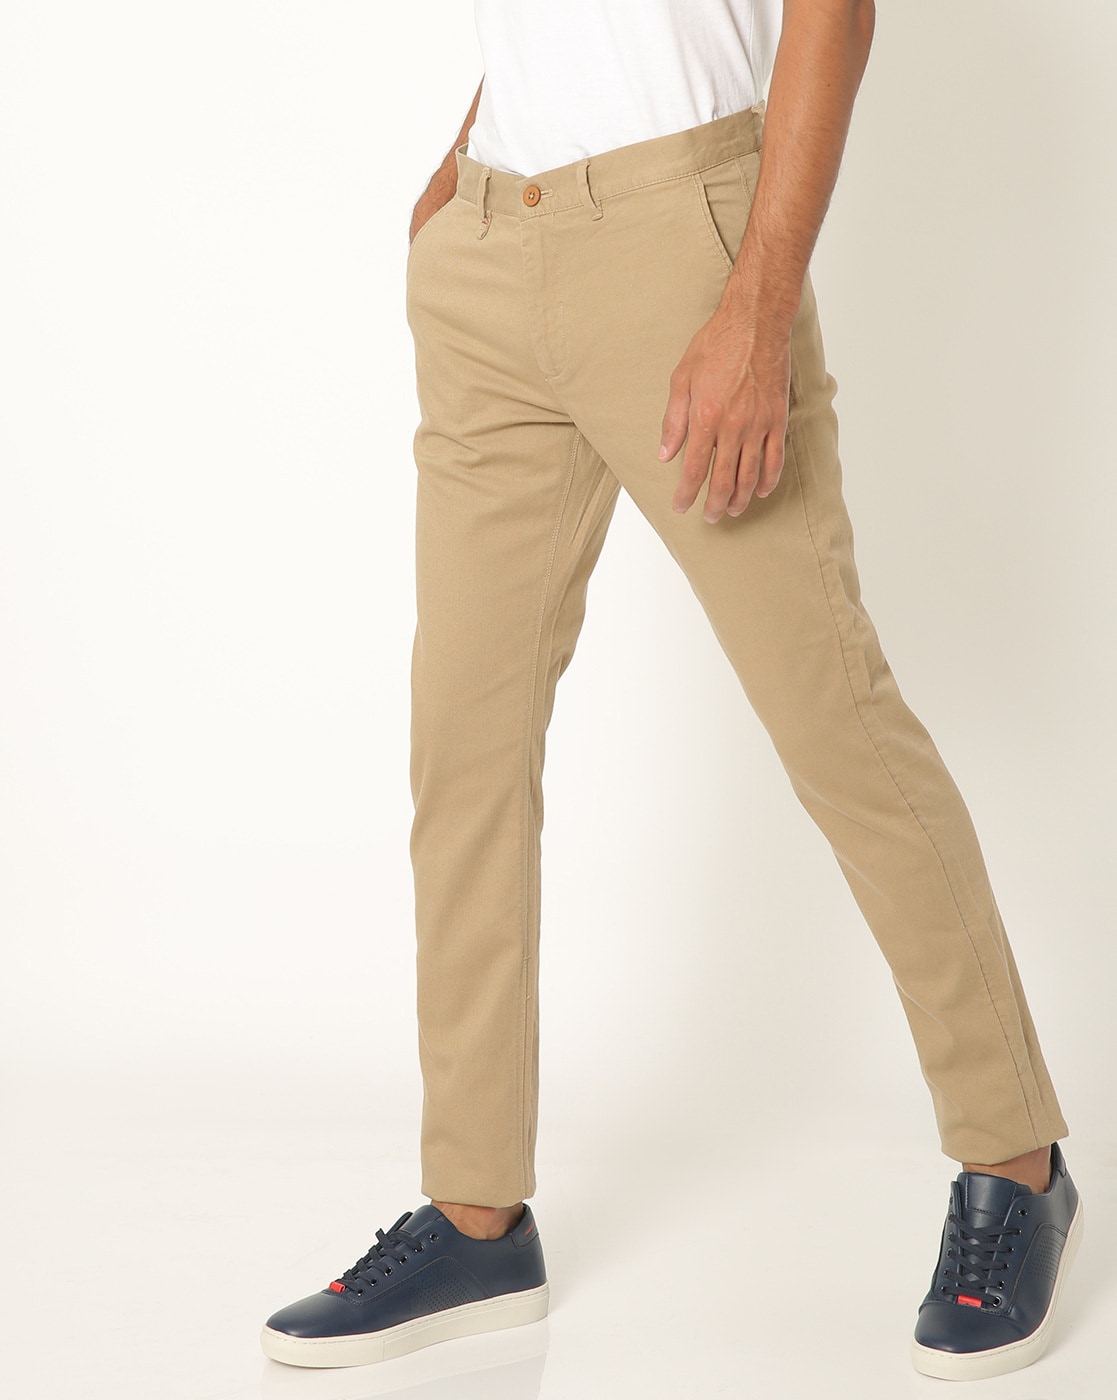 Celio Trousers  Buy Celio Trousers online in India